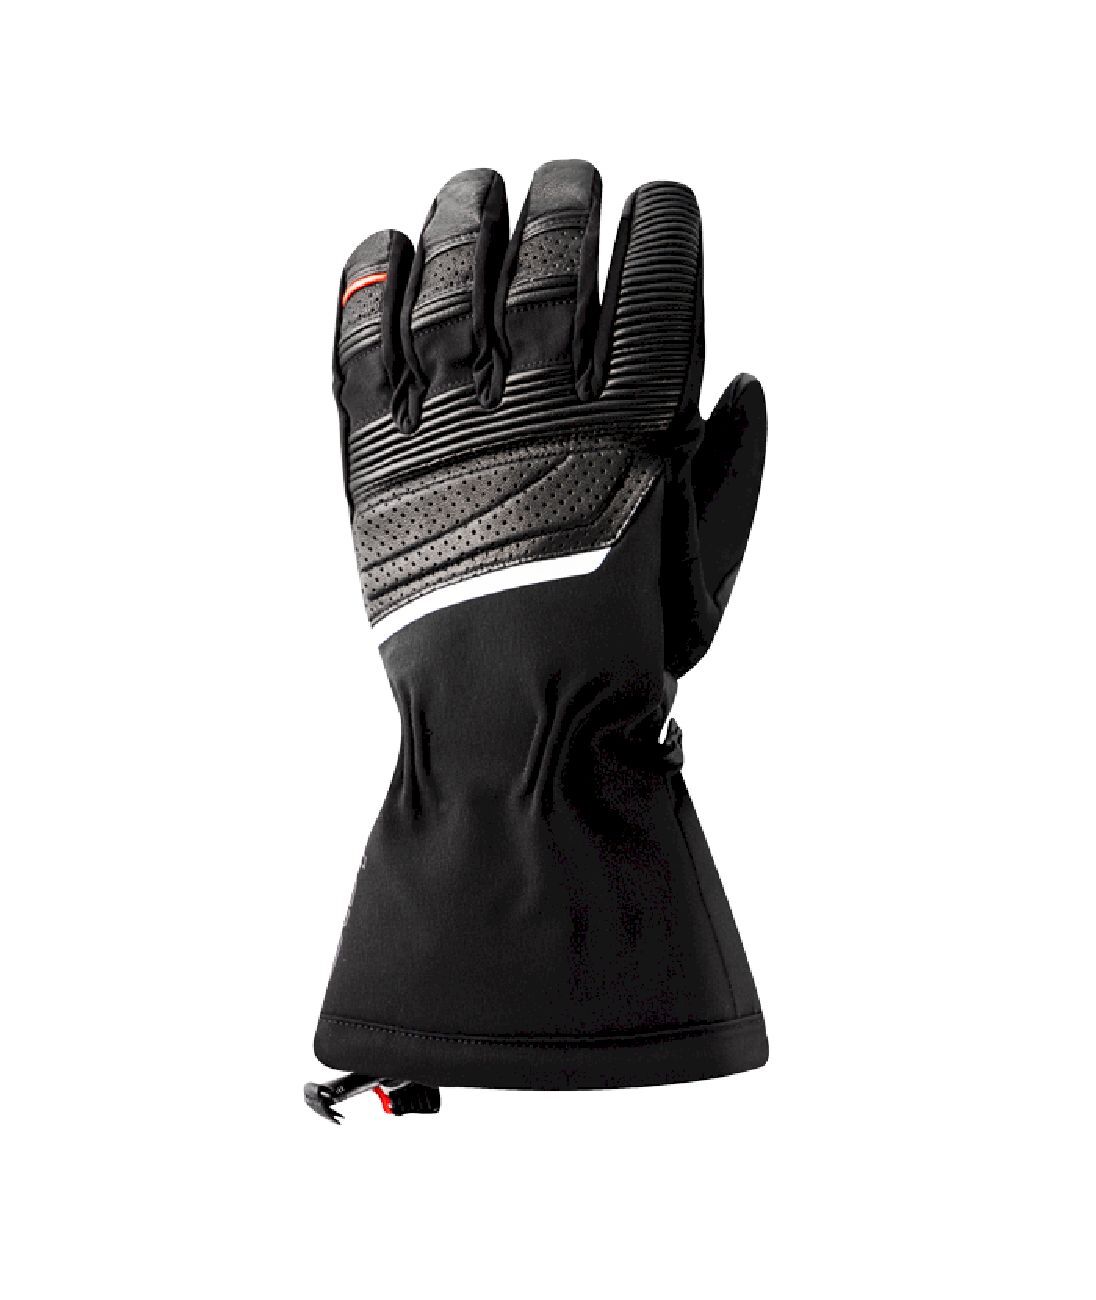 Lenz Heat Glove 6.0 Finger Cap - Ski gloves - Men's